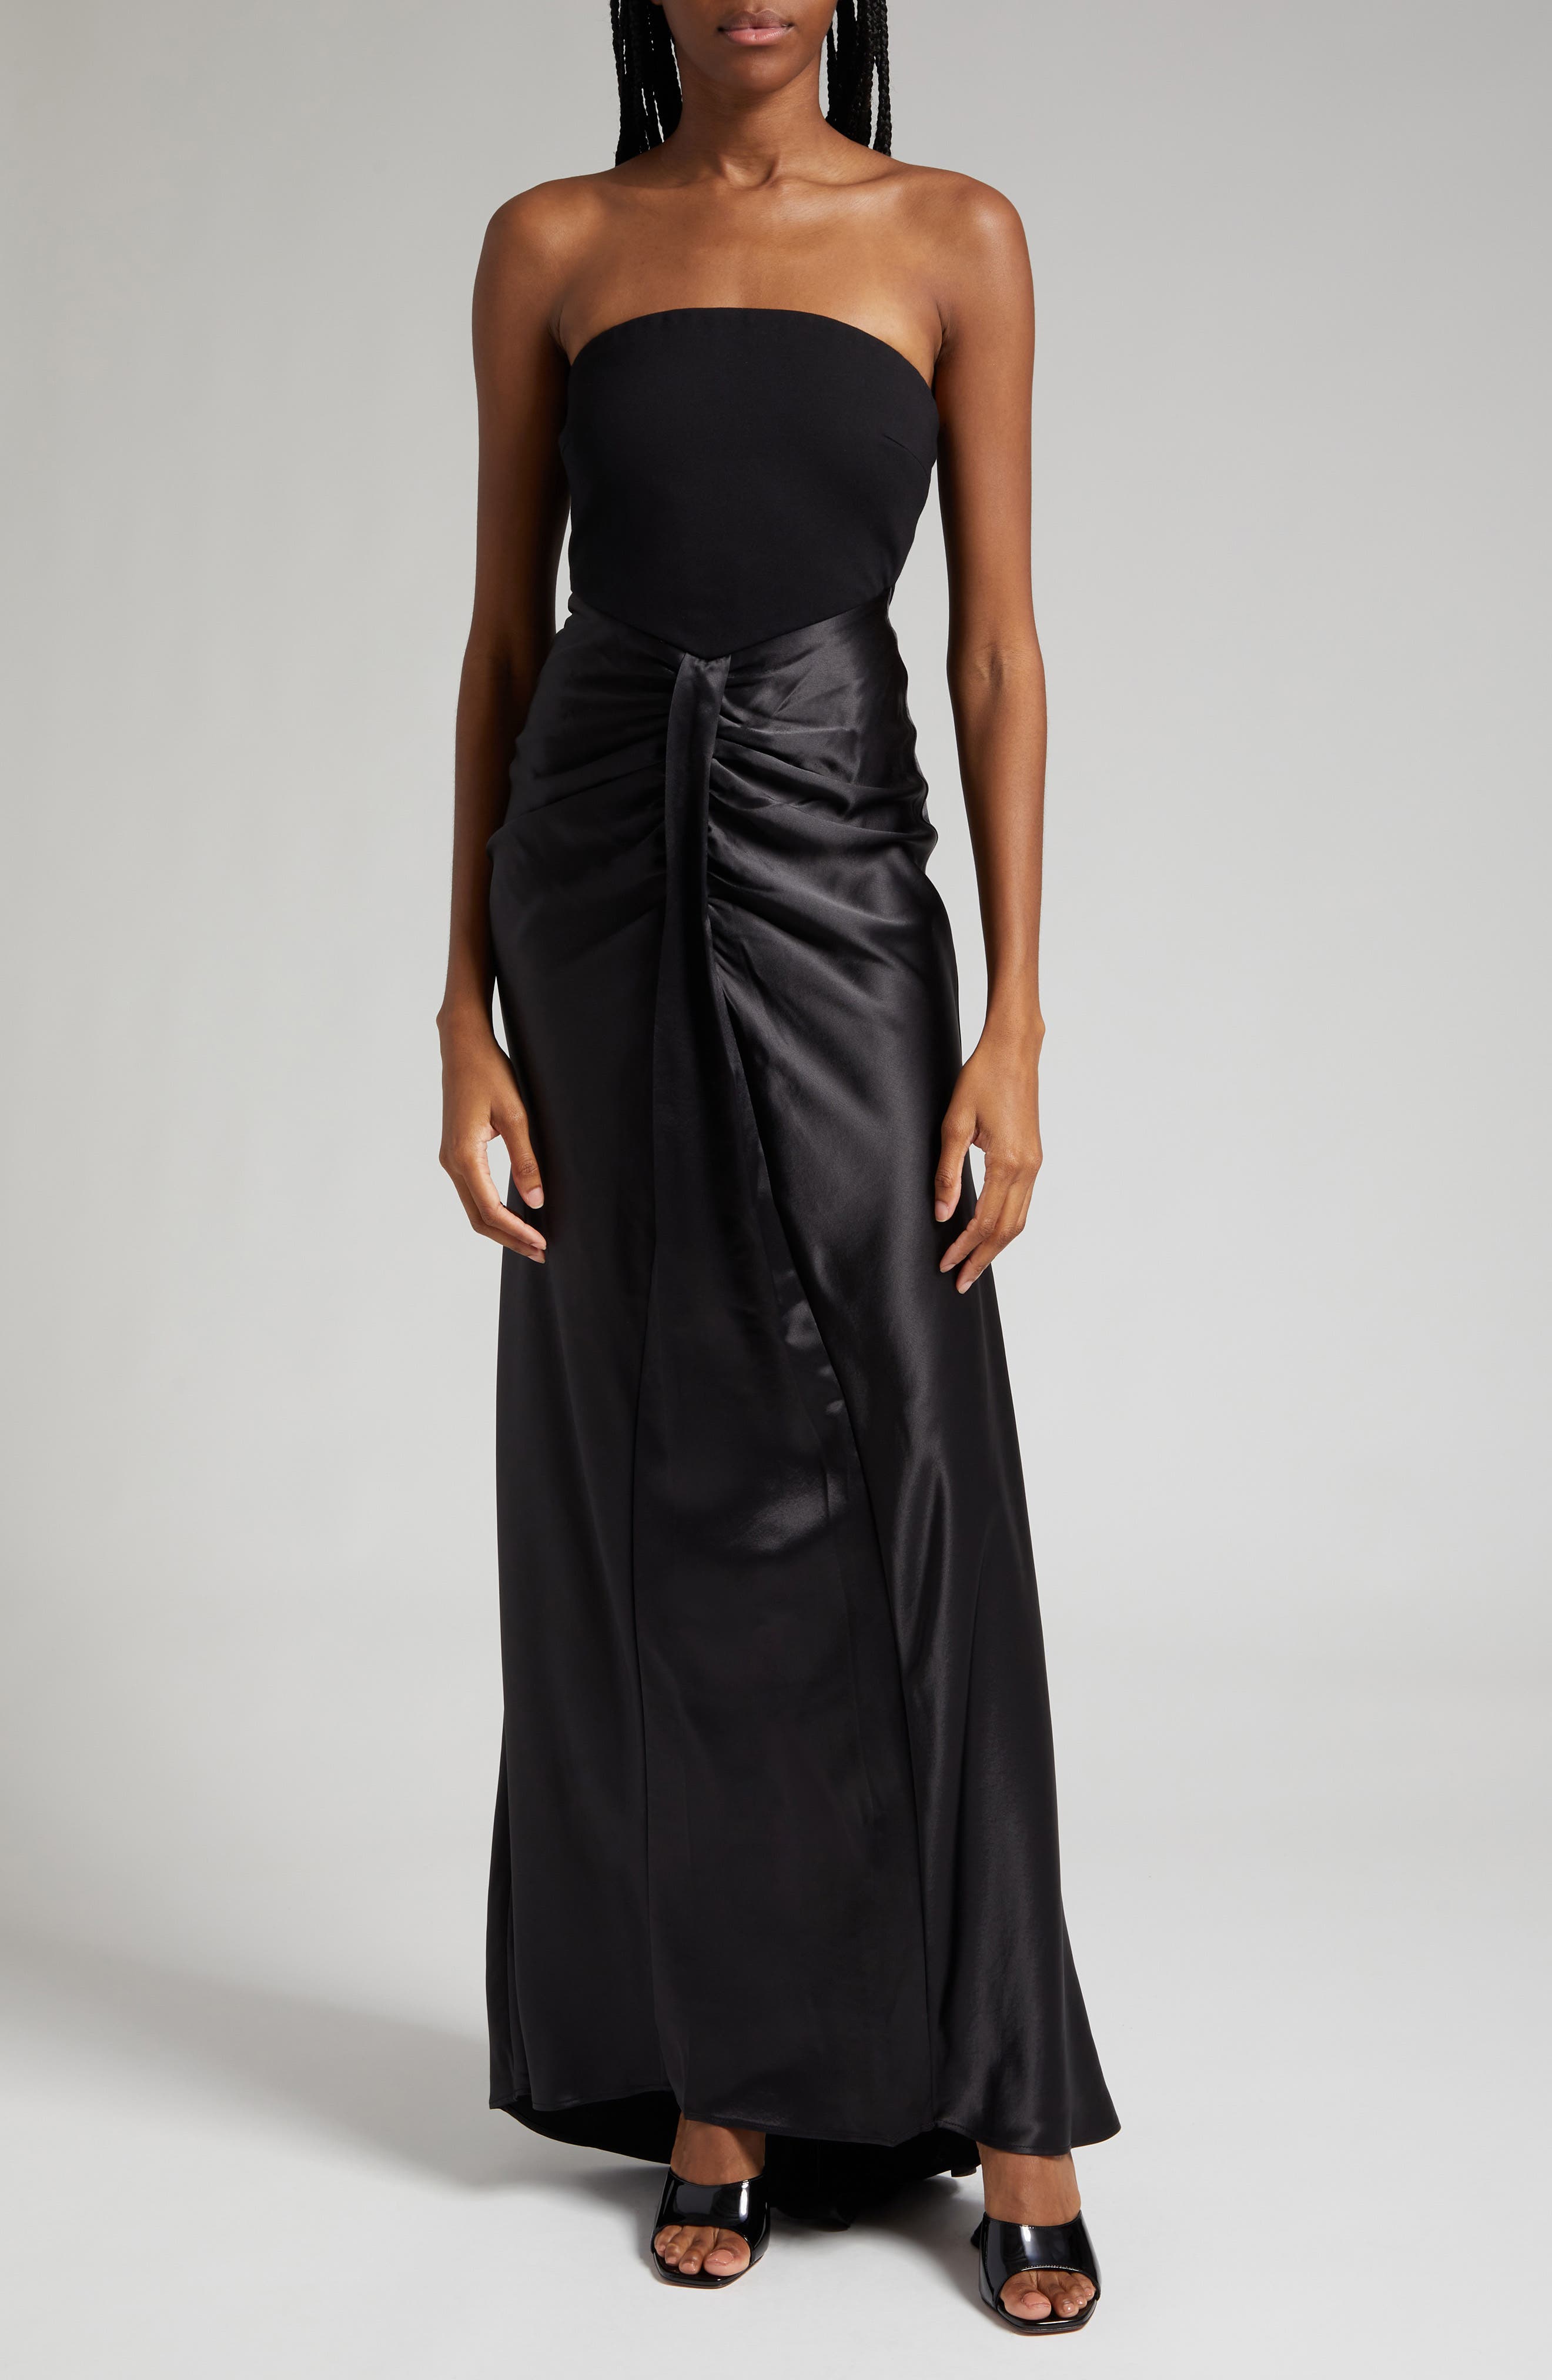 black satin strapless dress